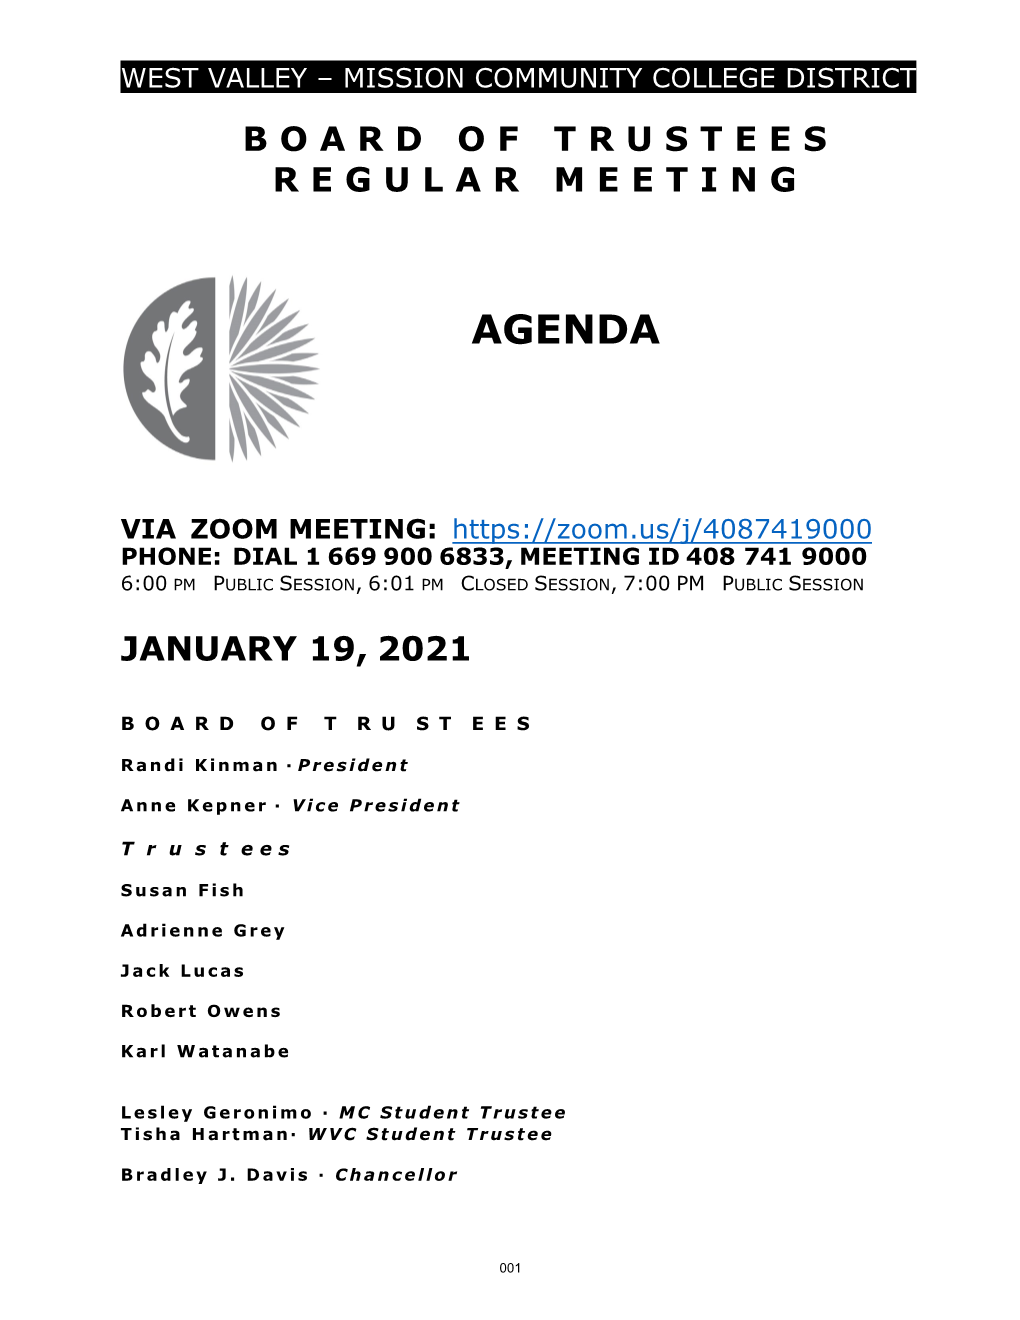 January 19, 2021, WVMCCD Board of Trustees